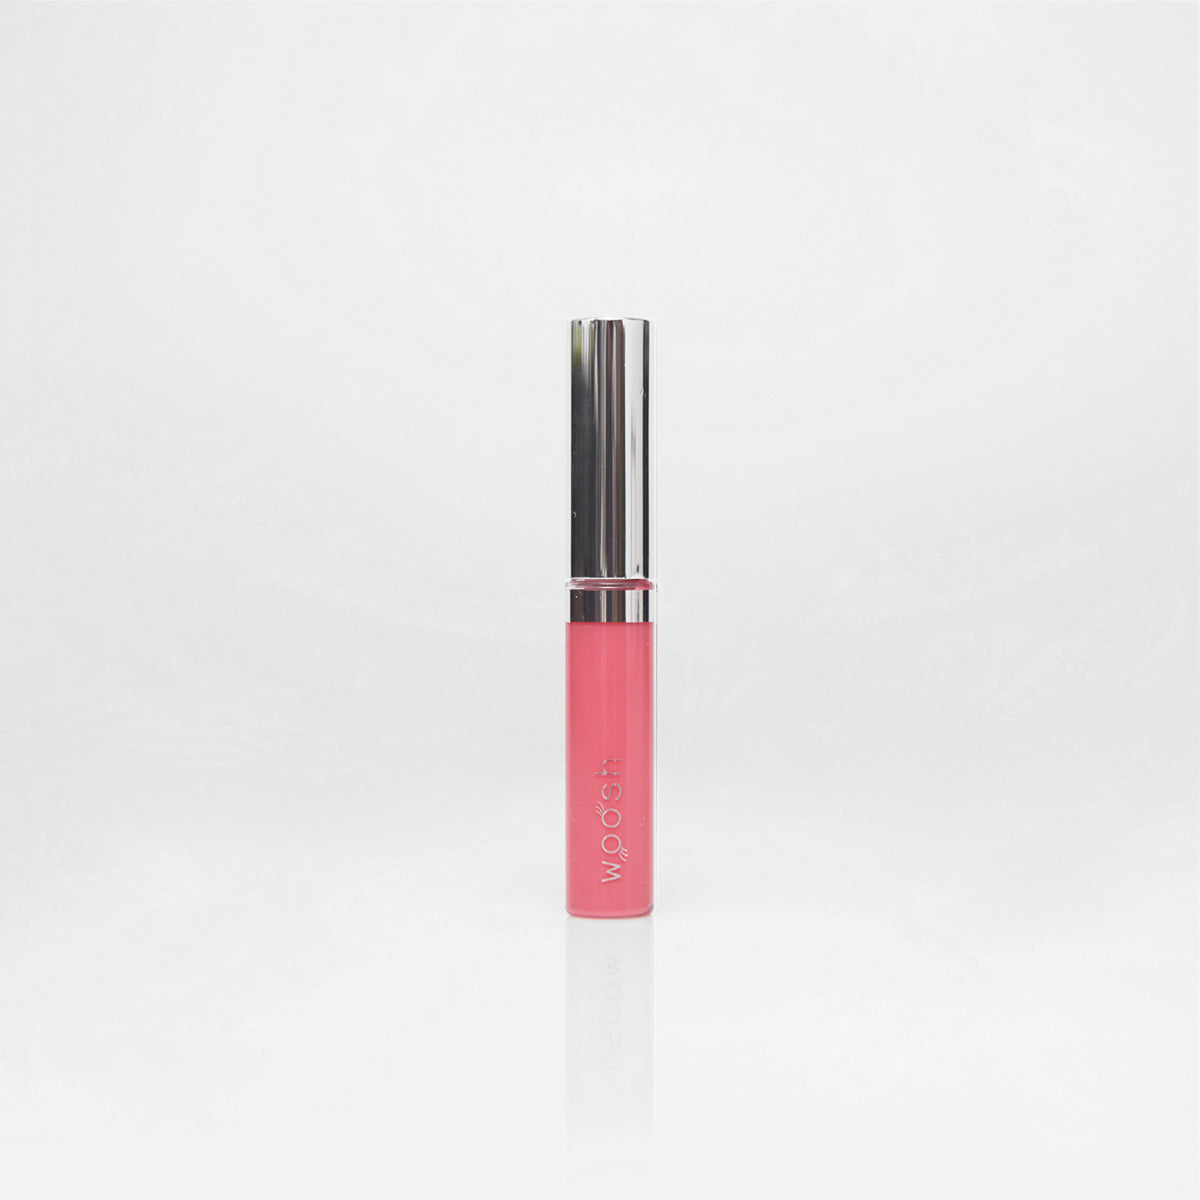 Woosh Beauty mini lip gloss in pink natural shade